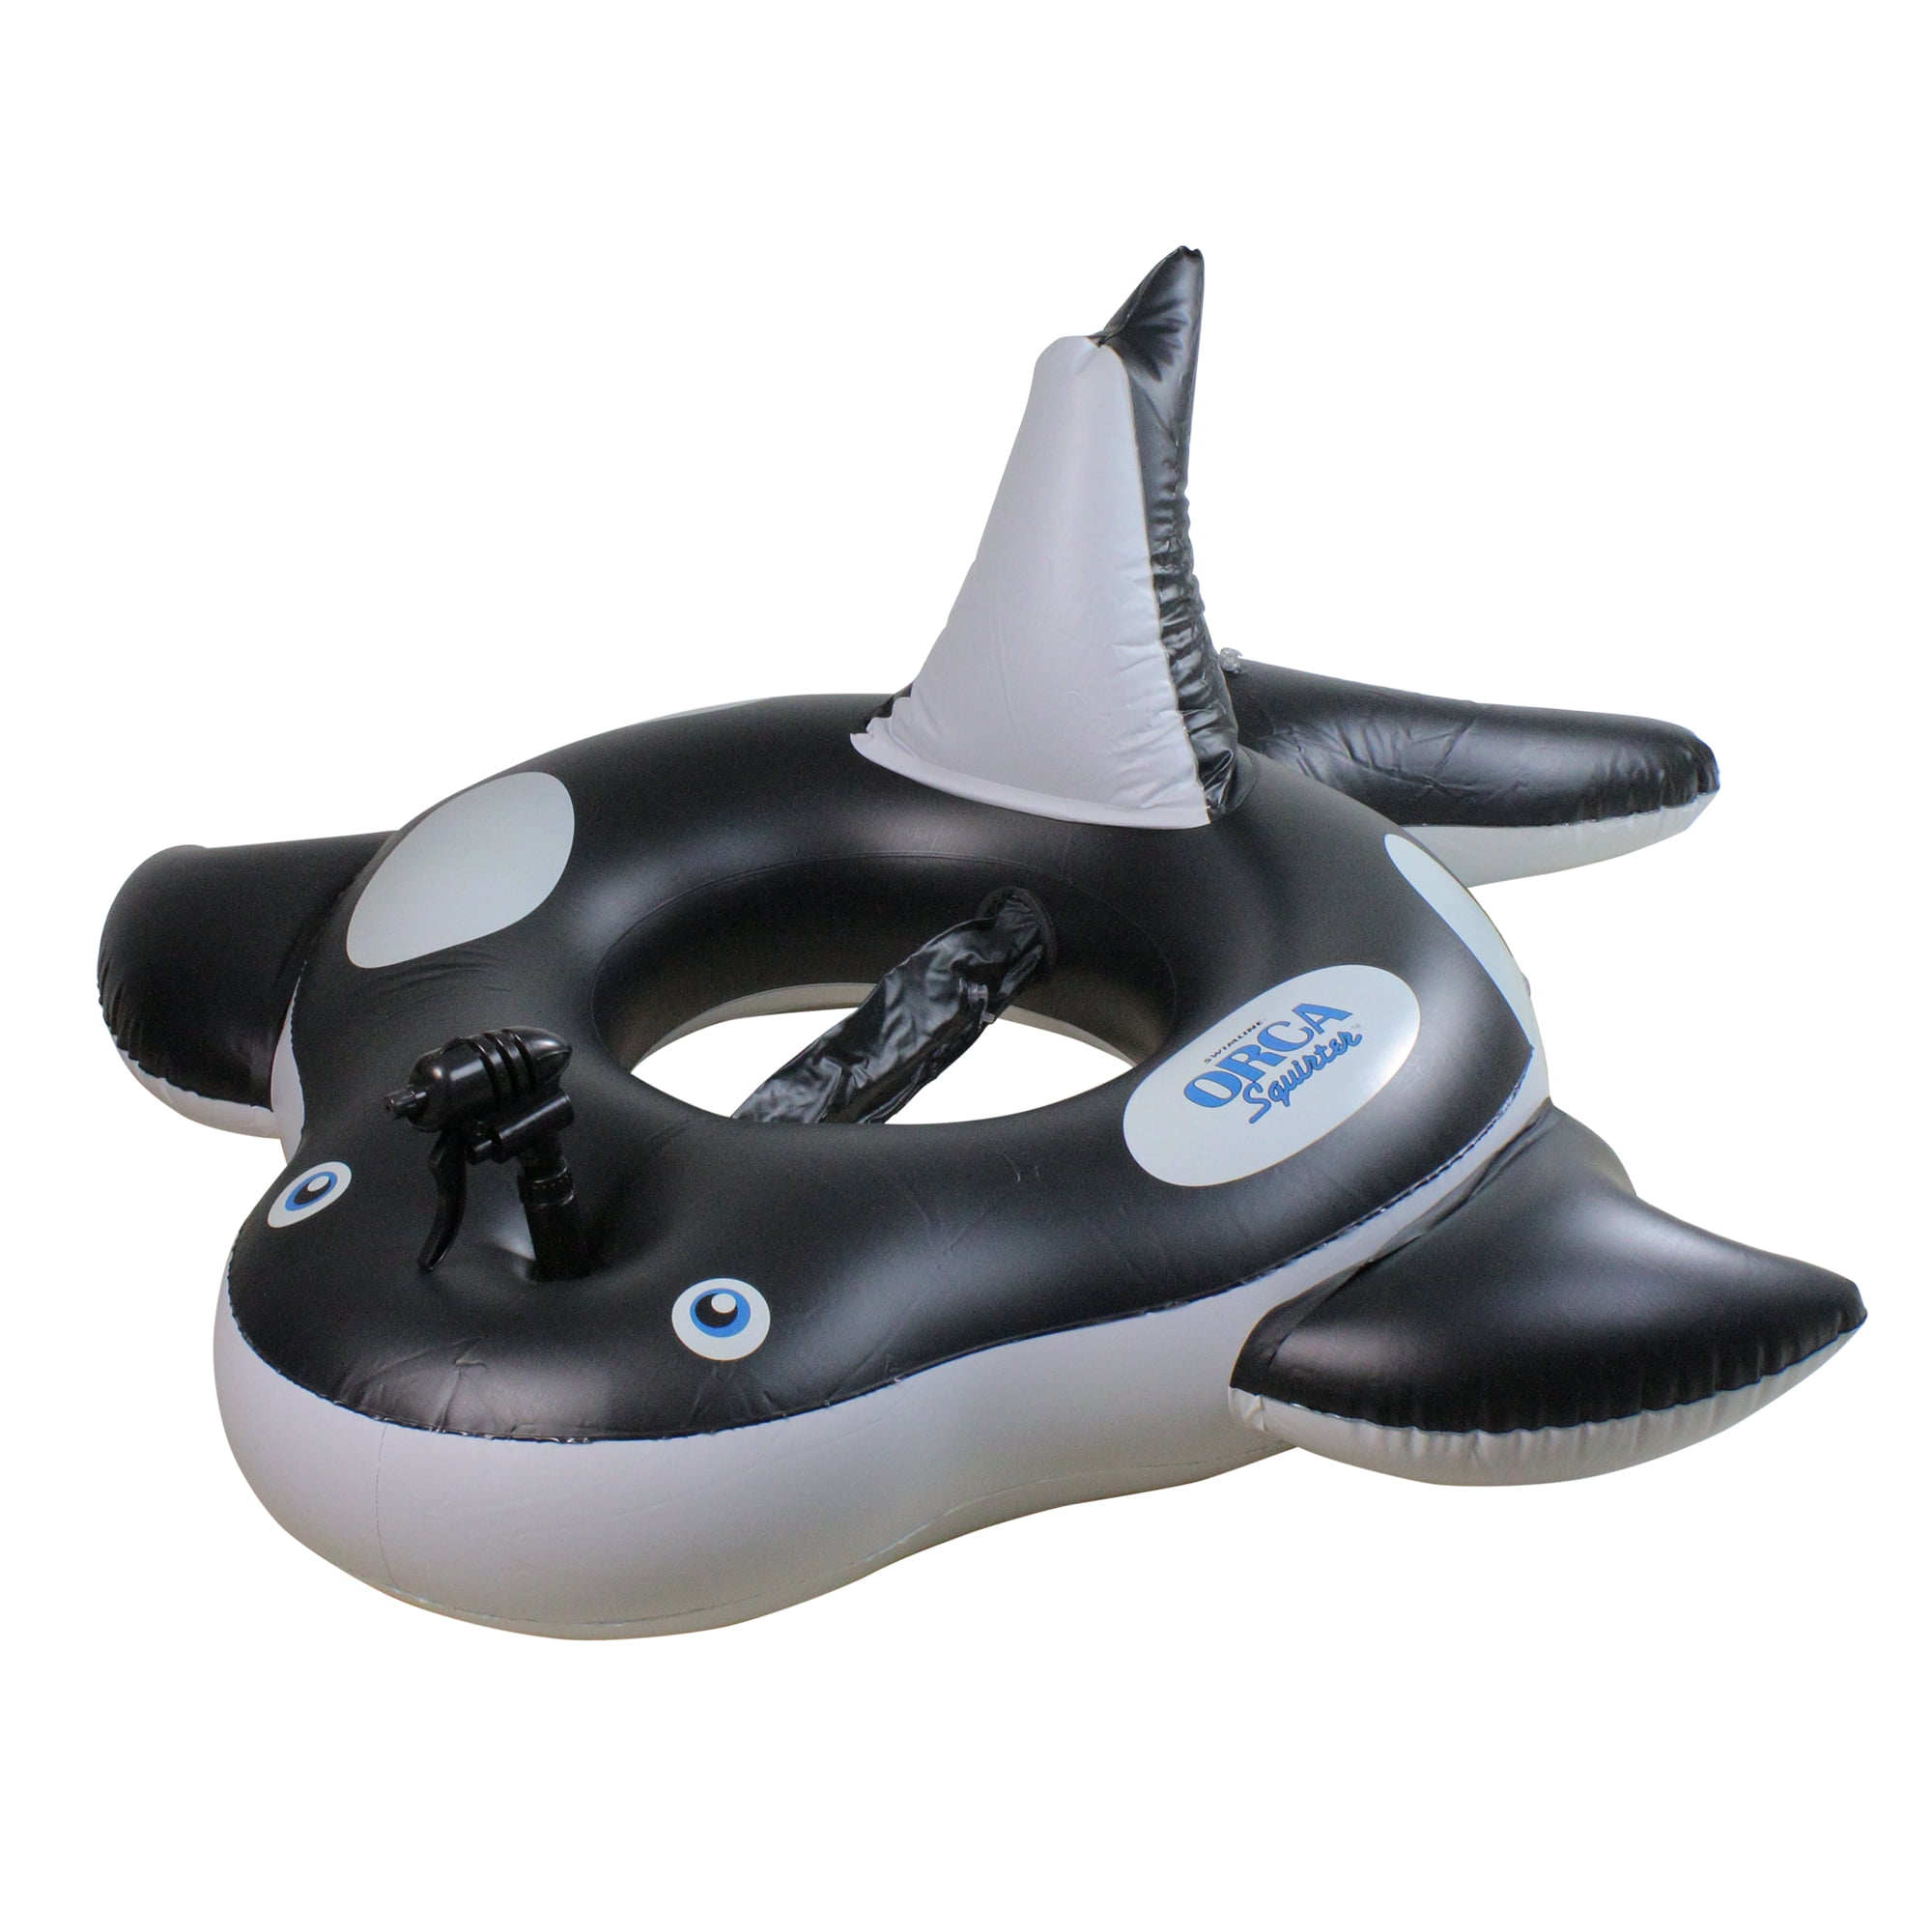 Handle Playtek Toys Shark Inflatable Pool Float W 